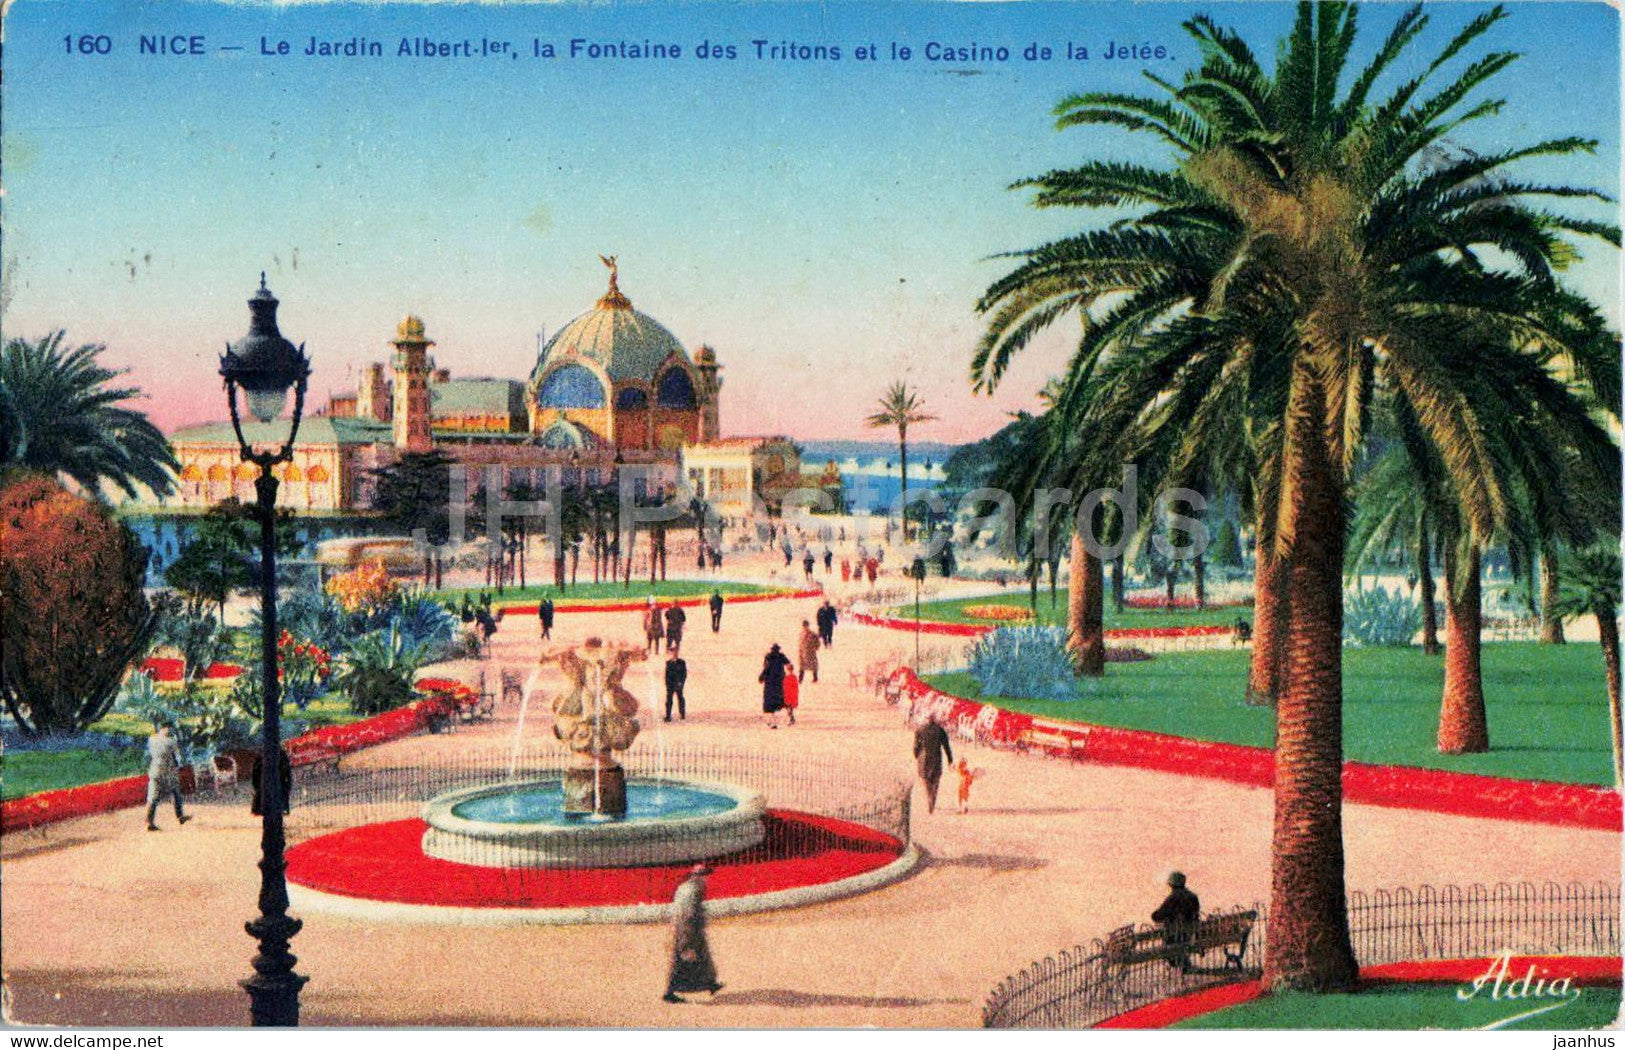 Nice - Le Jardin Albert Ier - La Fontaine des Tritons et le Casino de la Jetee 160 - old postcard - 1933 - France - used - JH Postcards